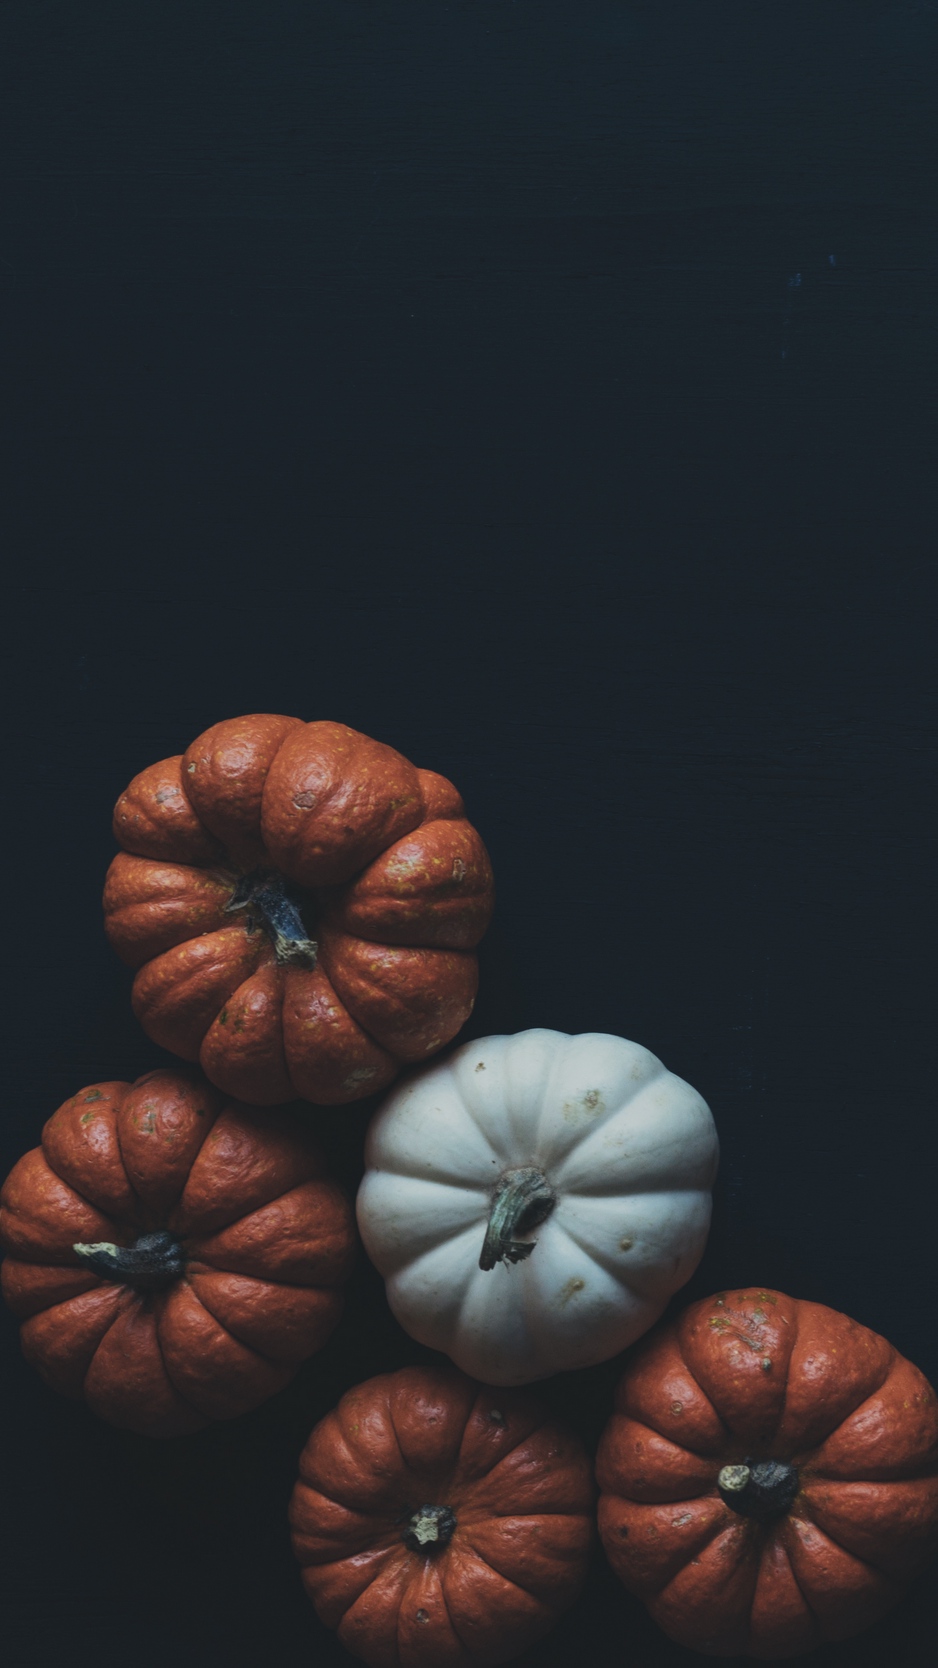 Wallpaper Pumpkin, Vegetables, Dark Wallpaper iPhone